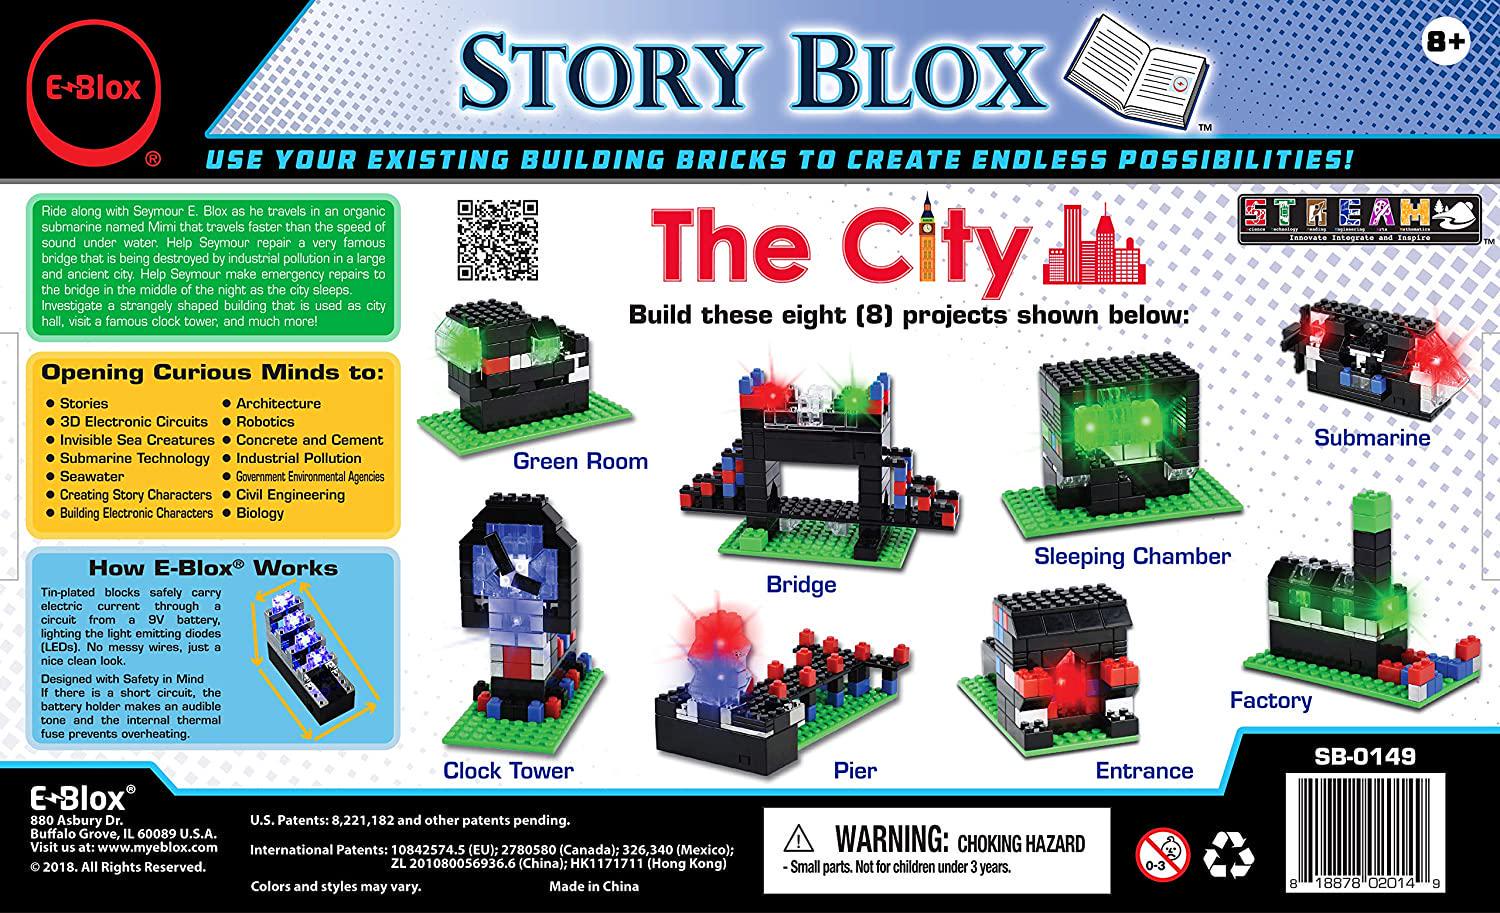 E-Blox, E-Blox Stories Blox Builder - The City LED Light-Up Building Blocks Stories Toy Set for Kids Ages 8+